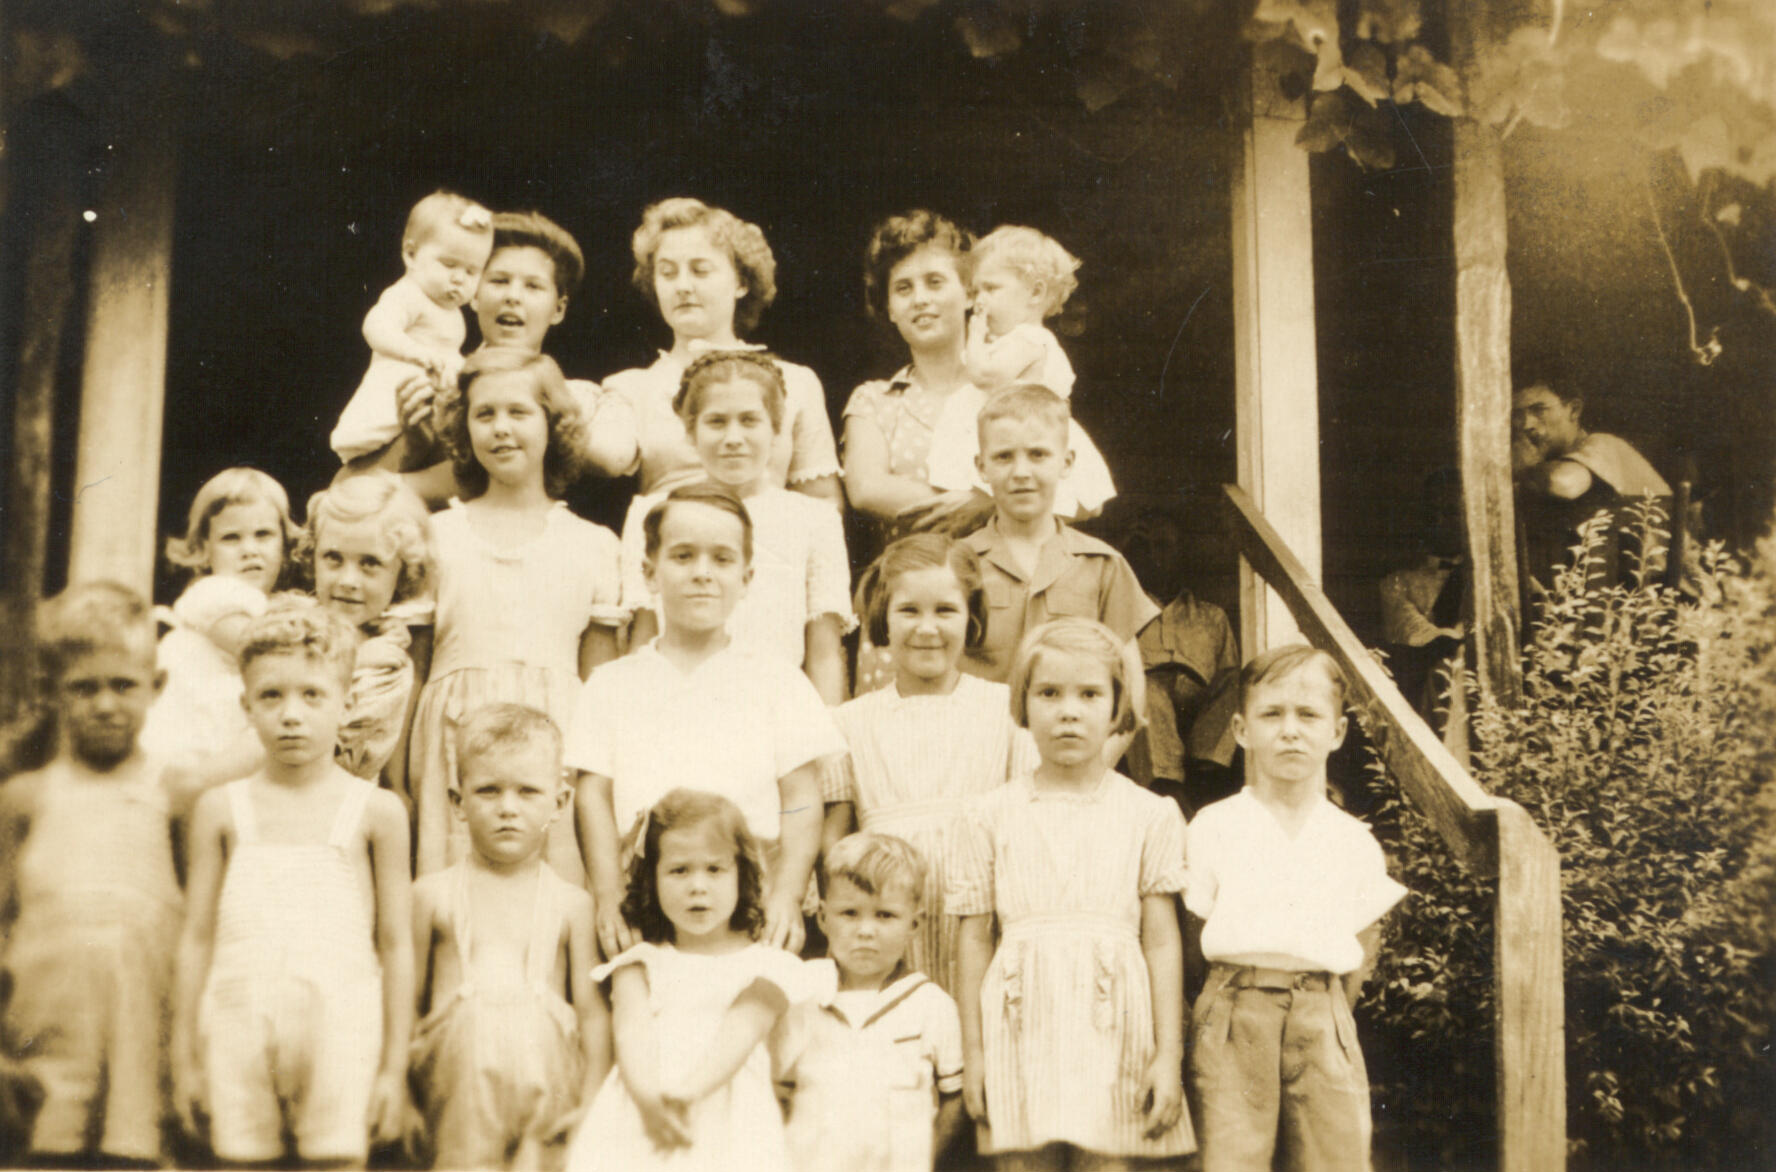 Colquitt grandchildren about 1946